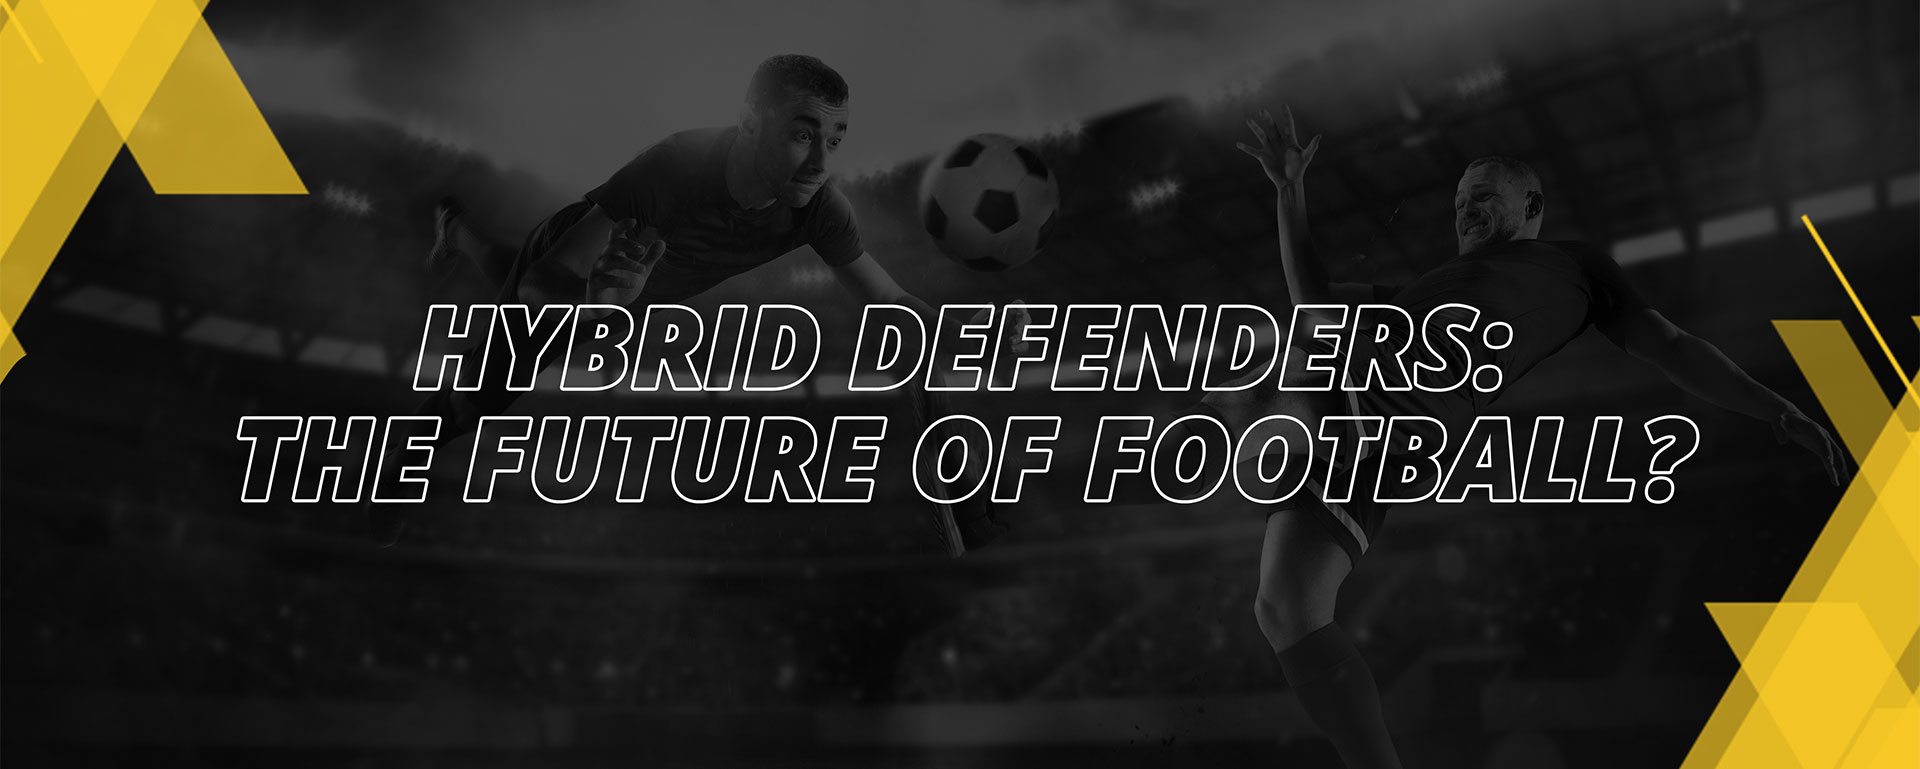 HYBRID DEFENDERS: THE FUTURE OF FOOTBALL?